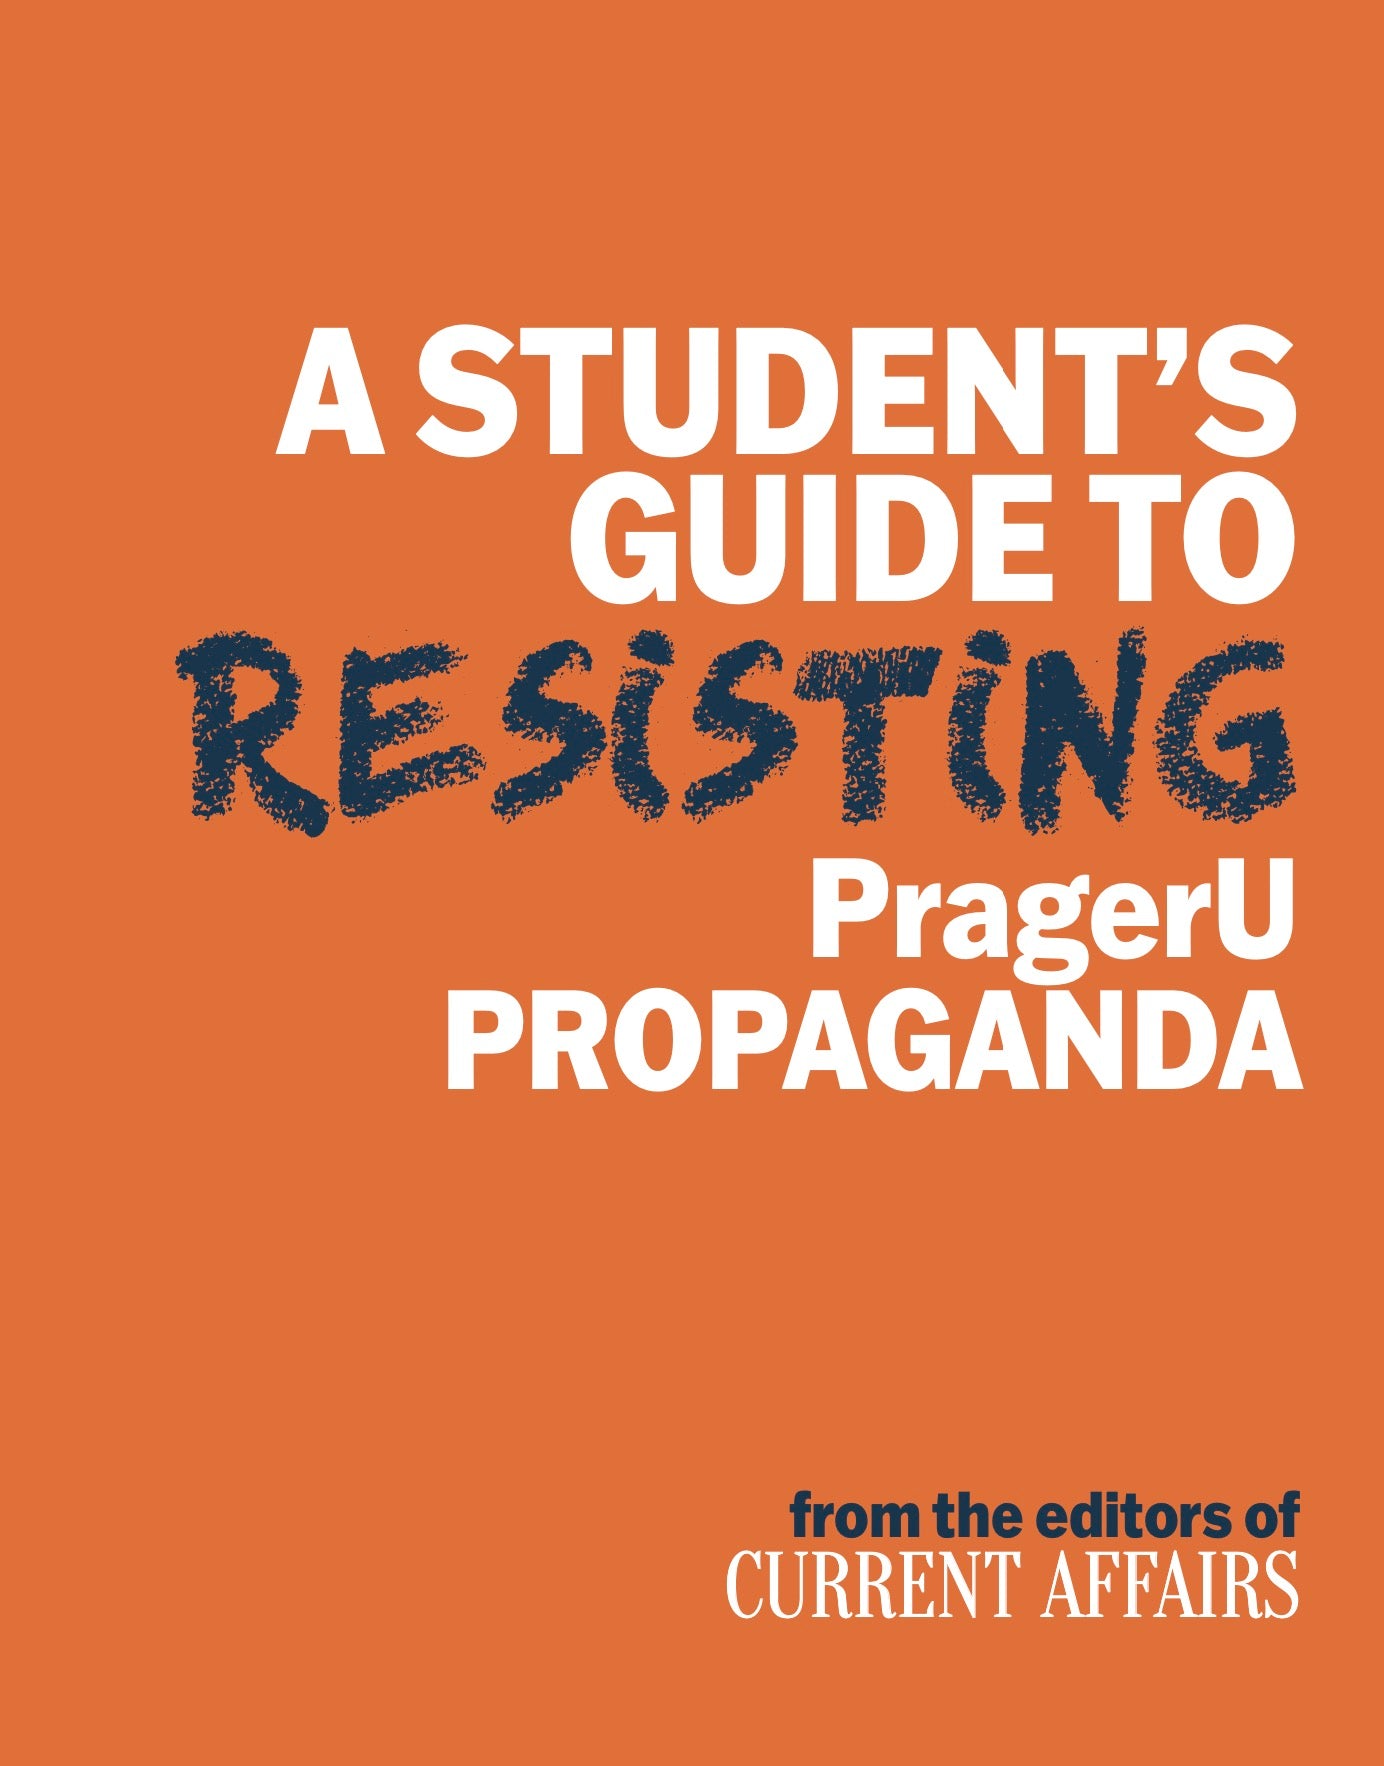 A Student's Guide to Resisting PragerU Propaganda